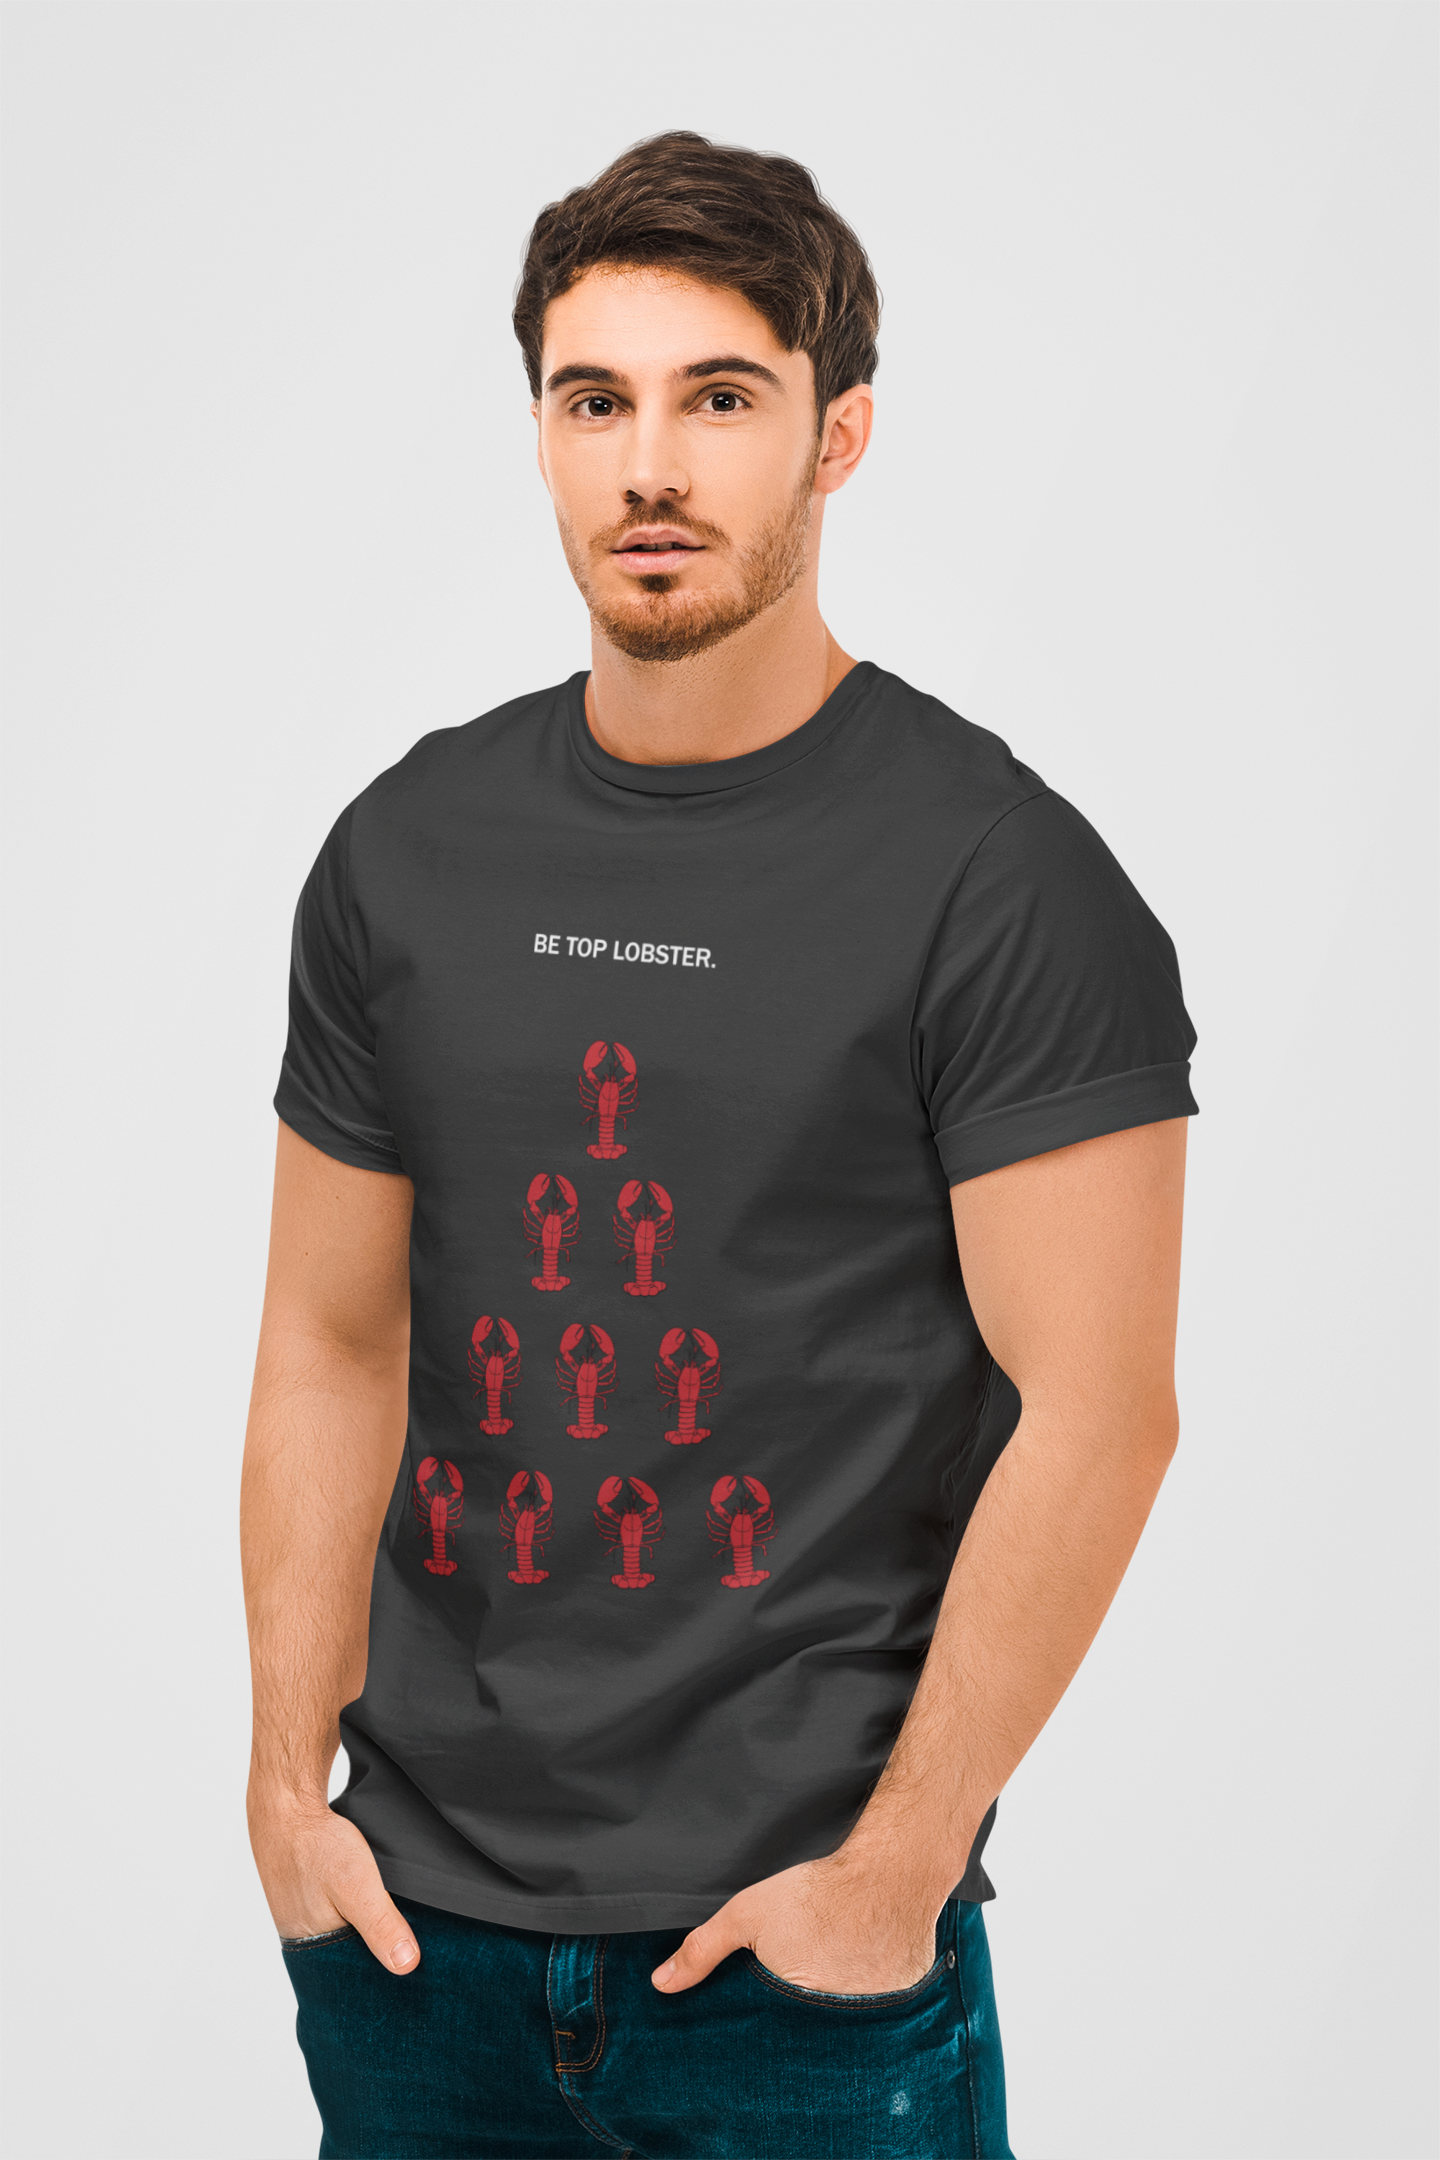 Be Top Lobster Jordan Peterson T Shirt | Jordan Peterson Lobster T Shirt | Risk Being Offensive T Shirt